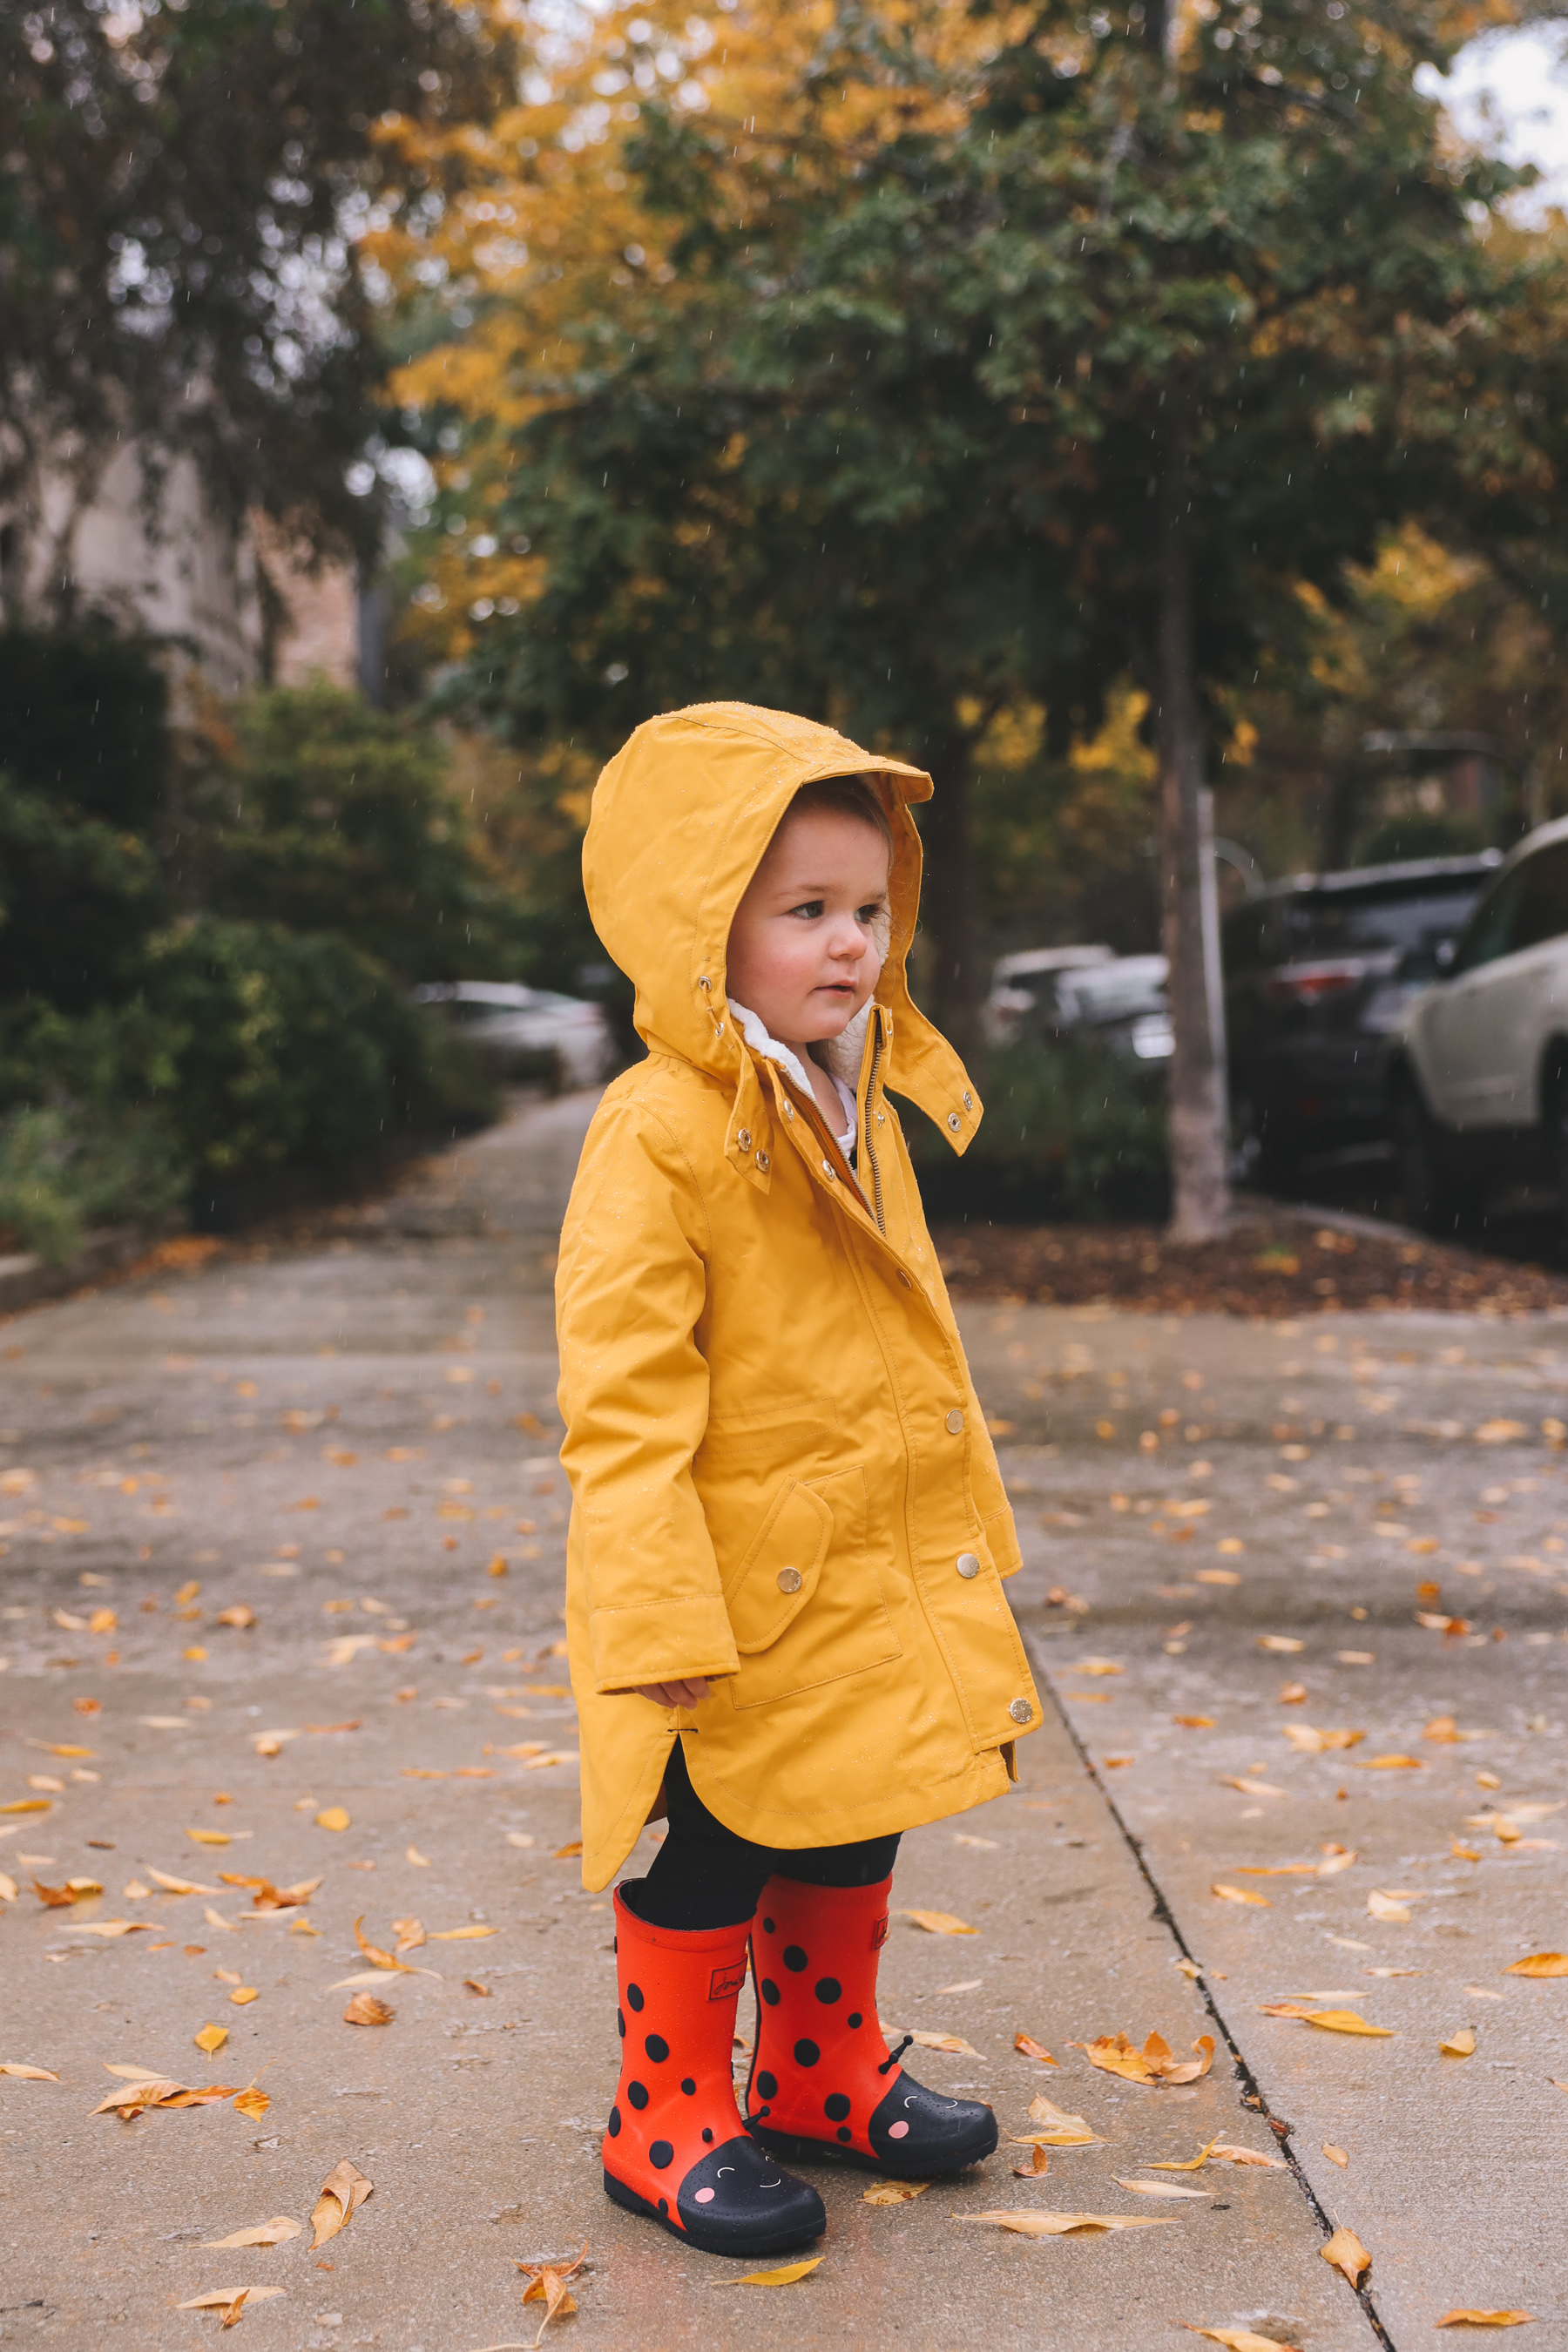 Annual Yellow Rain Coat Photos